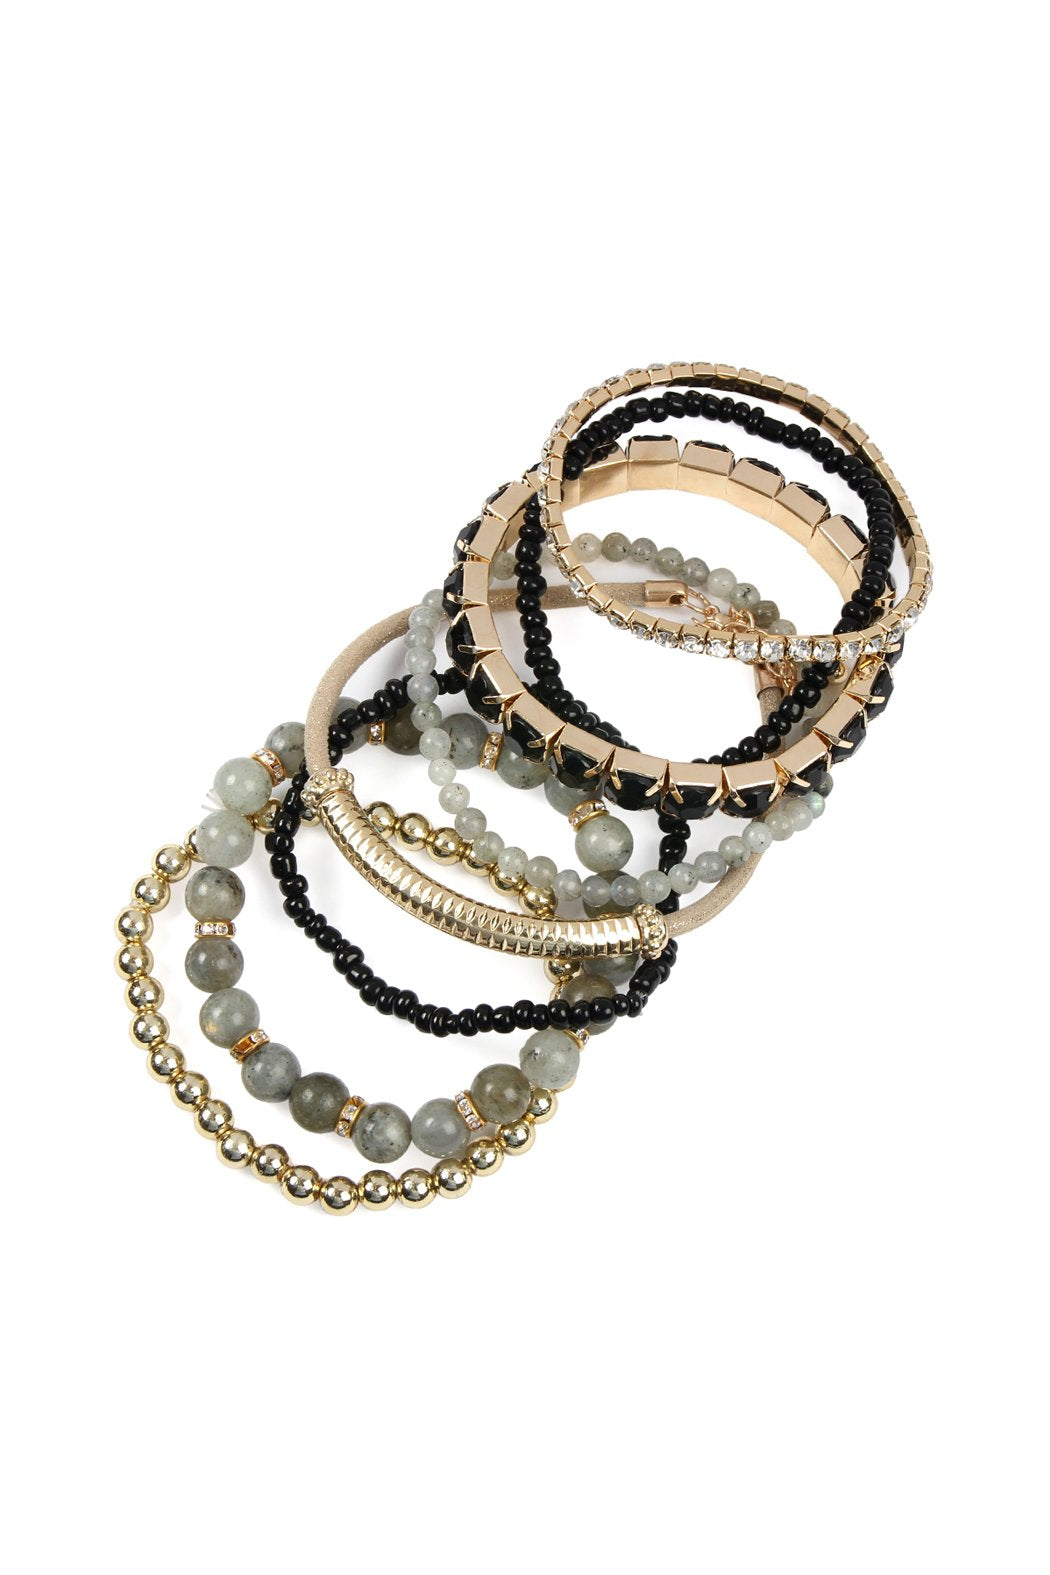 Hdb2269 - Plus Size Stackable Beads Bracelet Set - LOLA LUXE